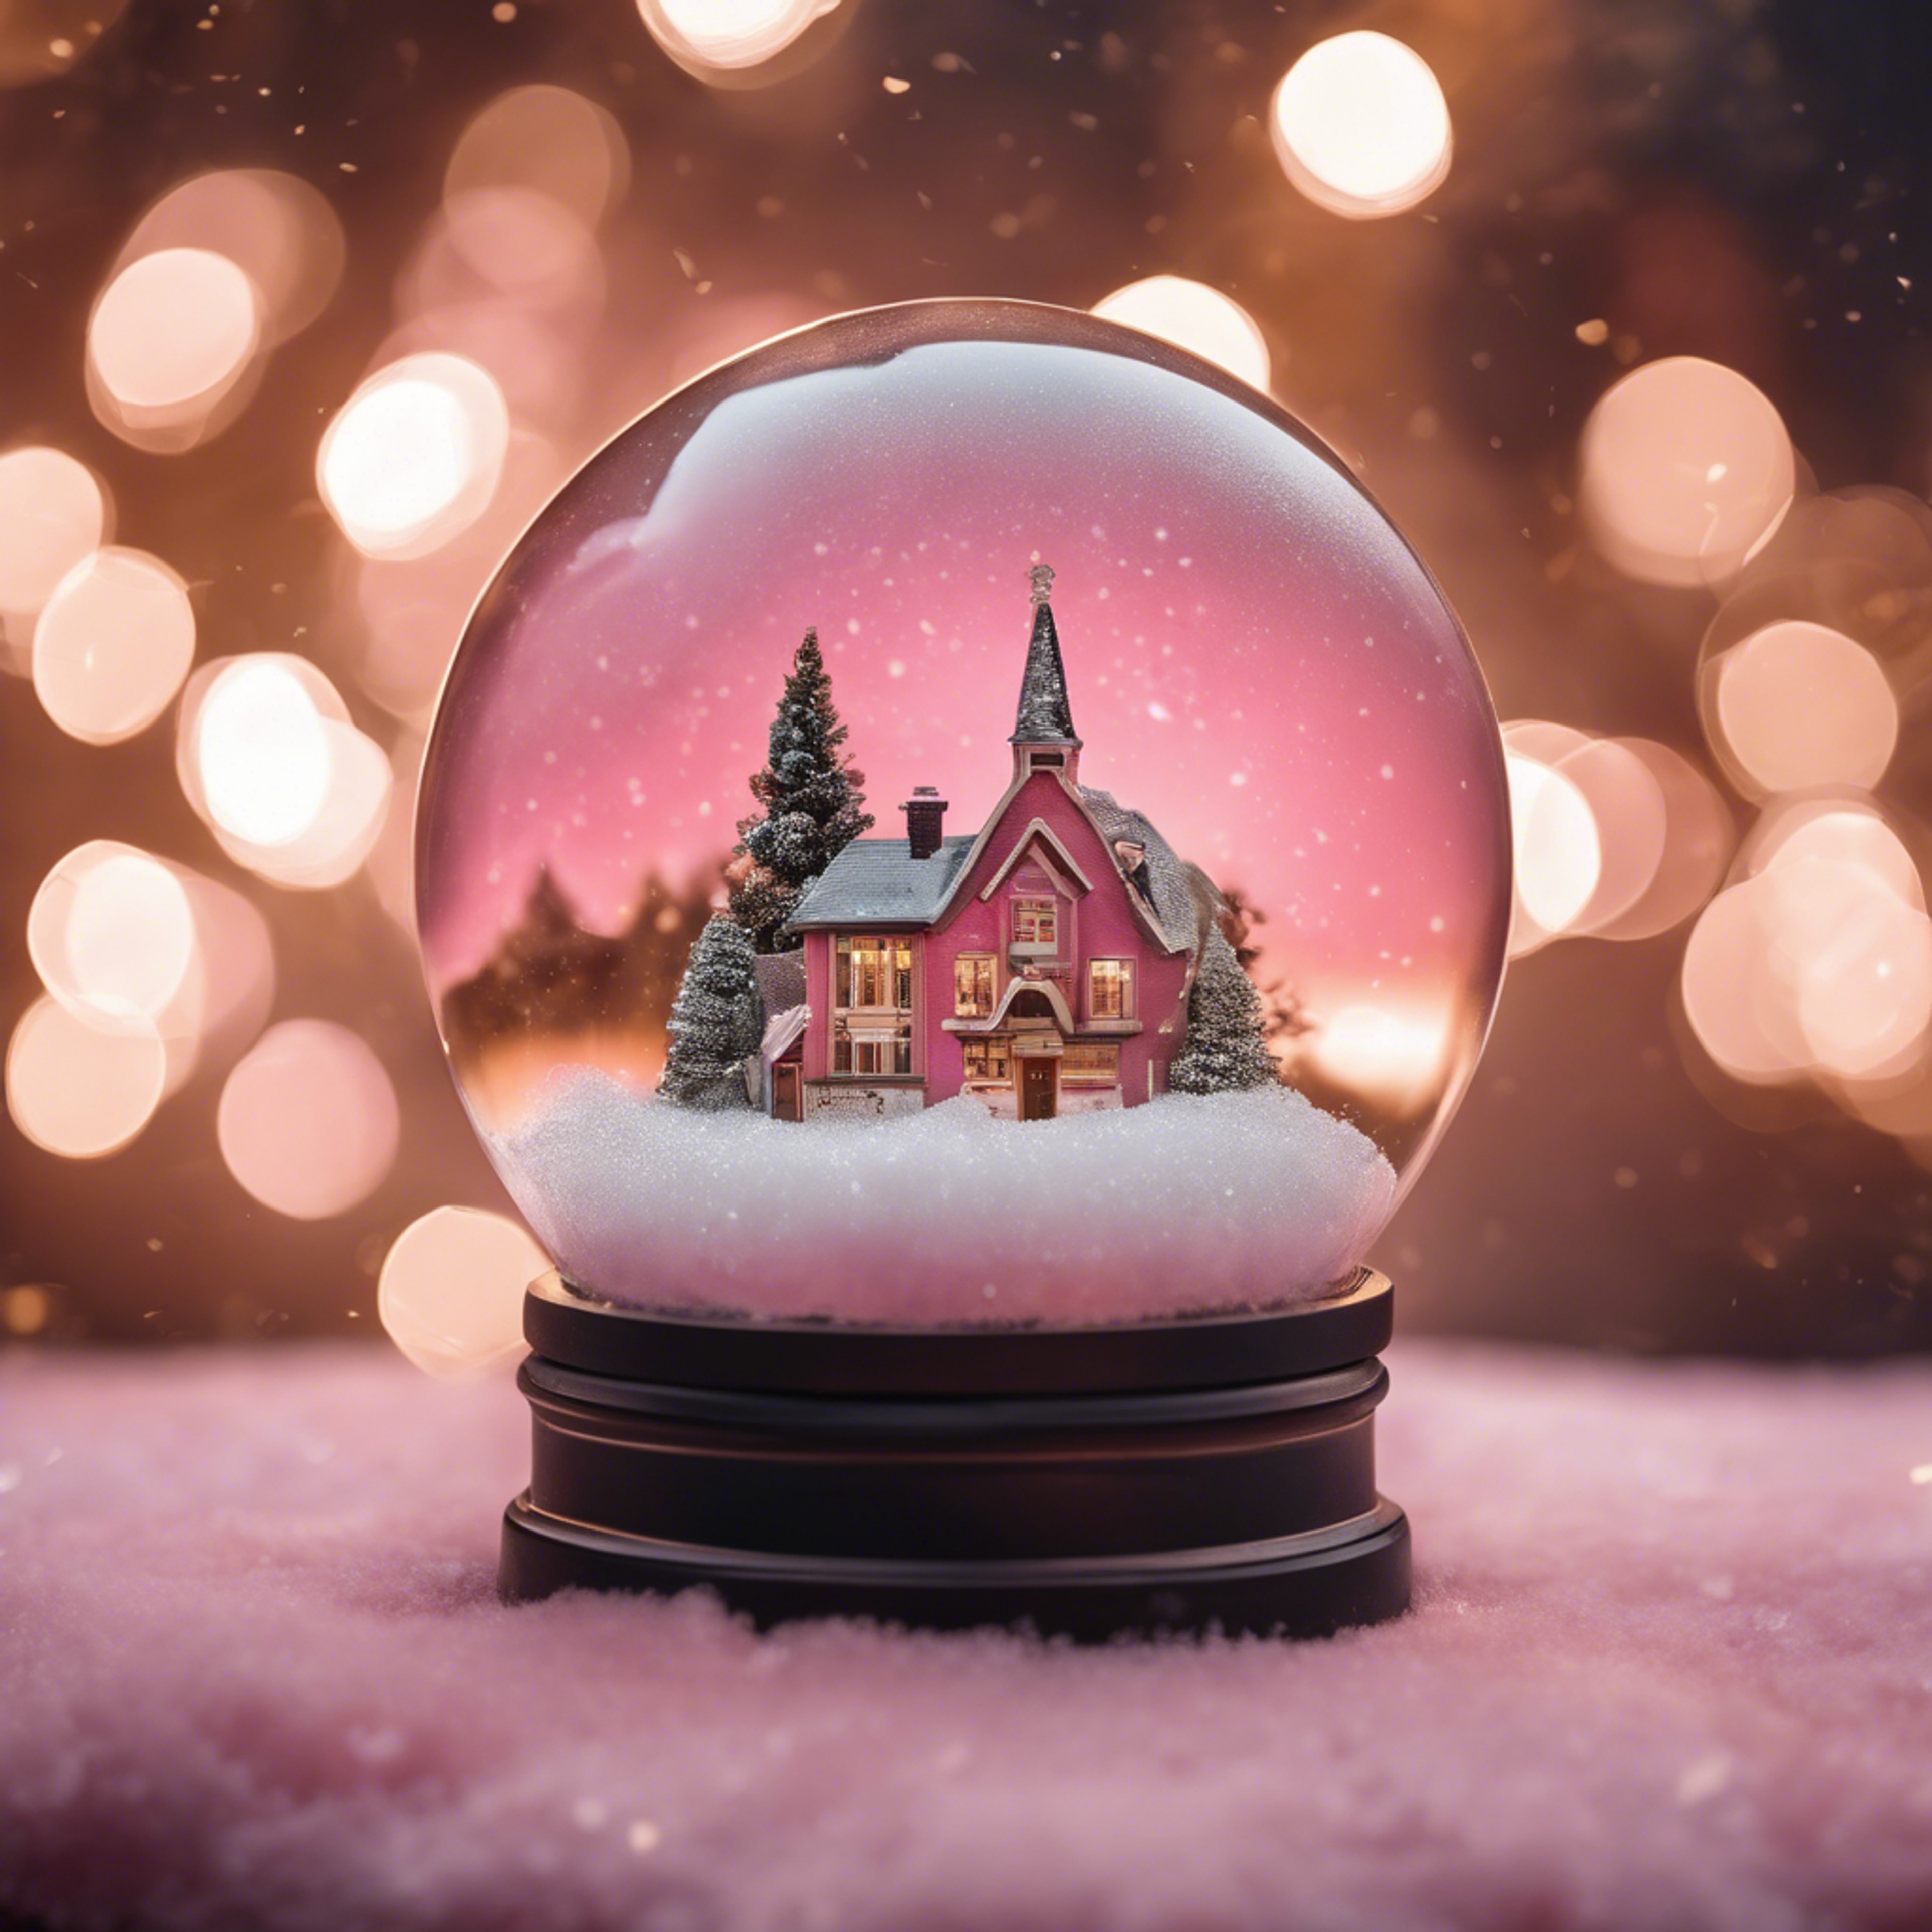 An enchanting snow globe revealing a quaint town under a pink Christmas sky. Wallpaper[a24ac541fe61415897f7]